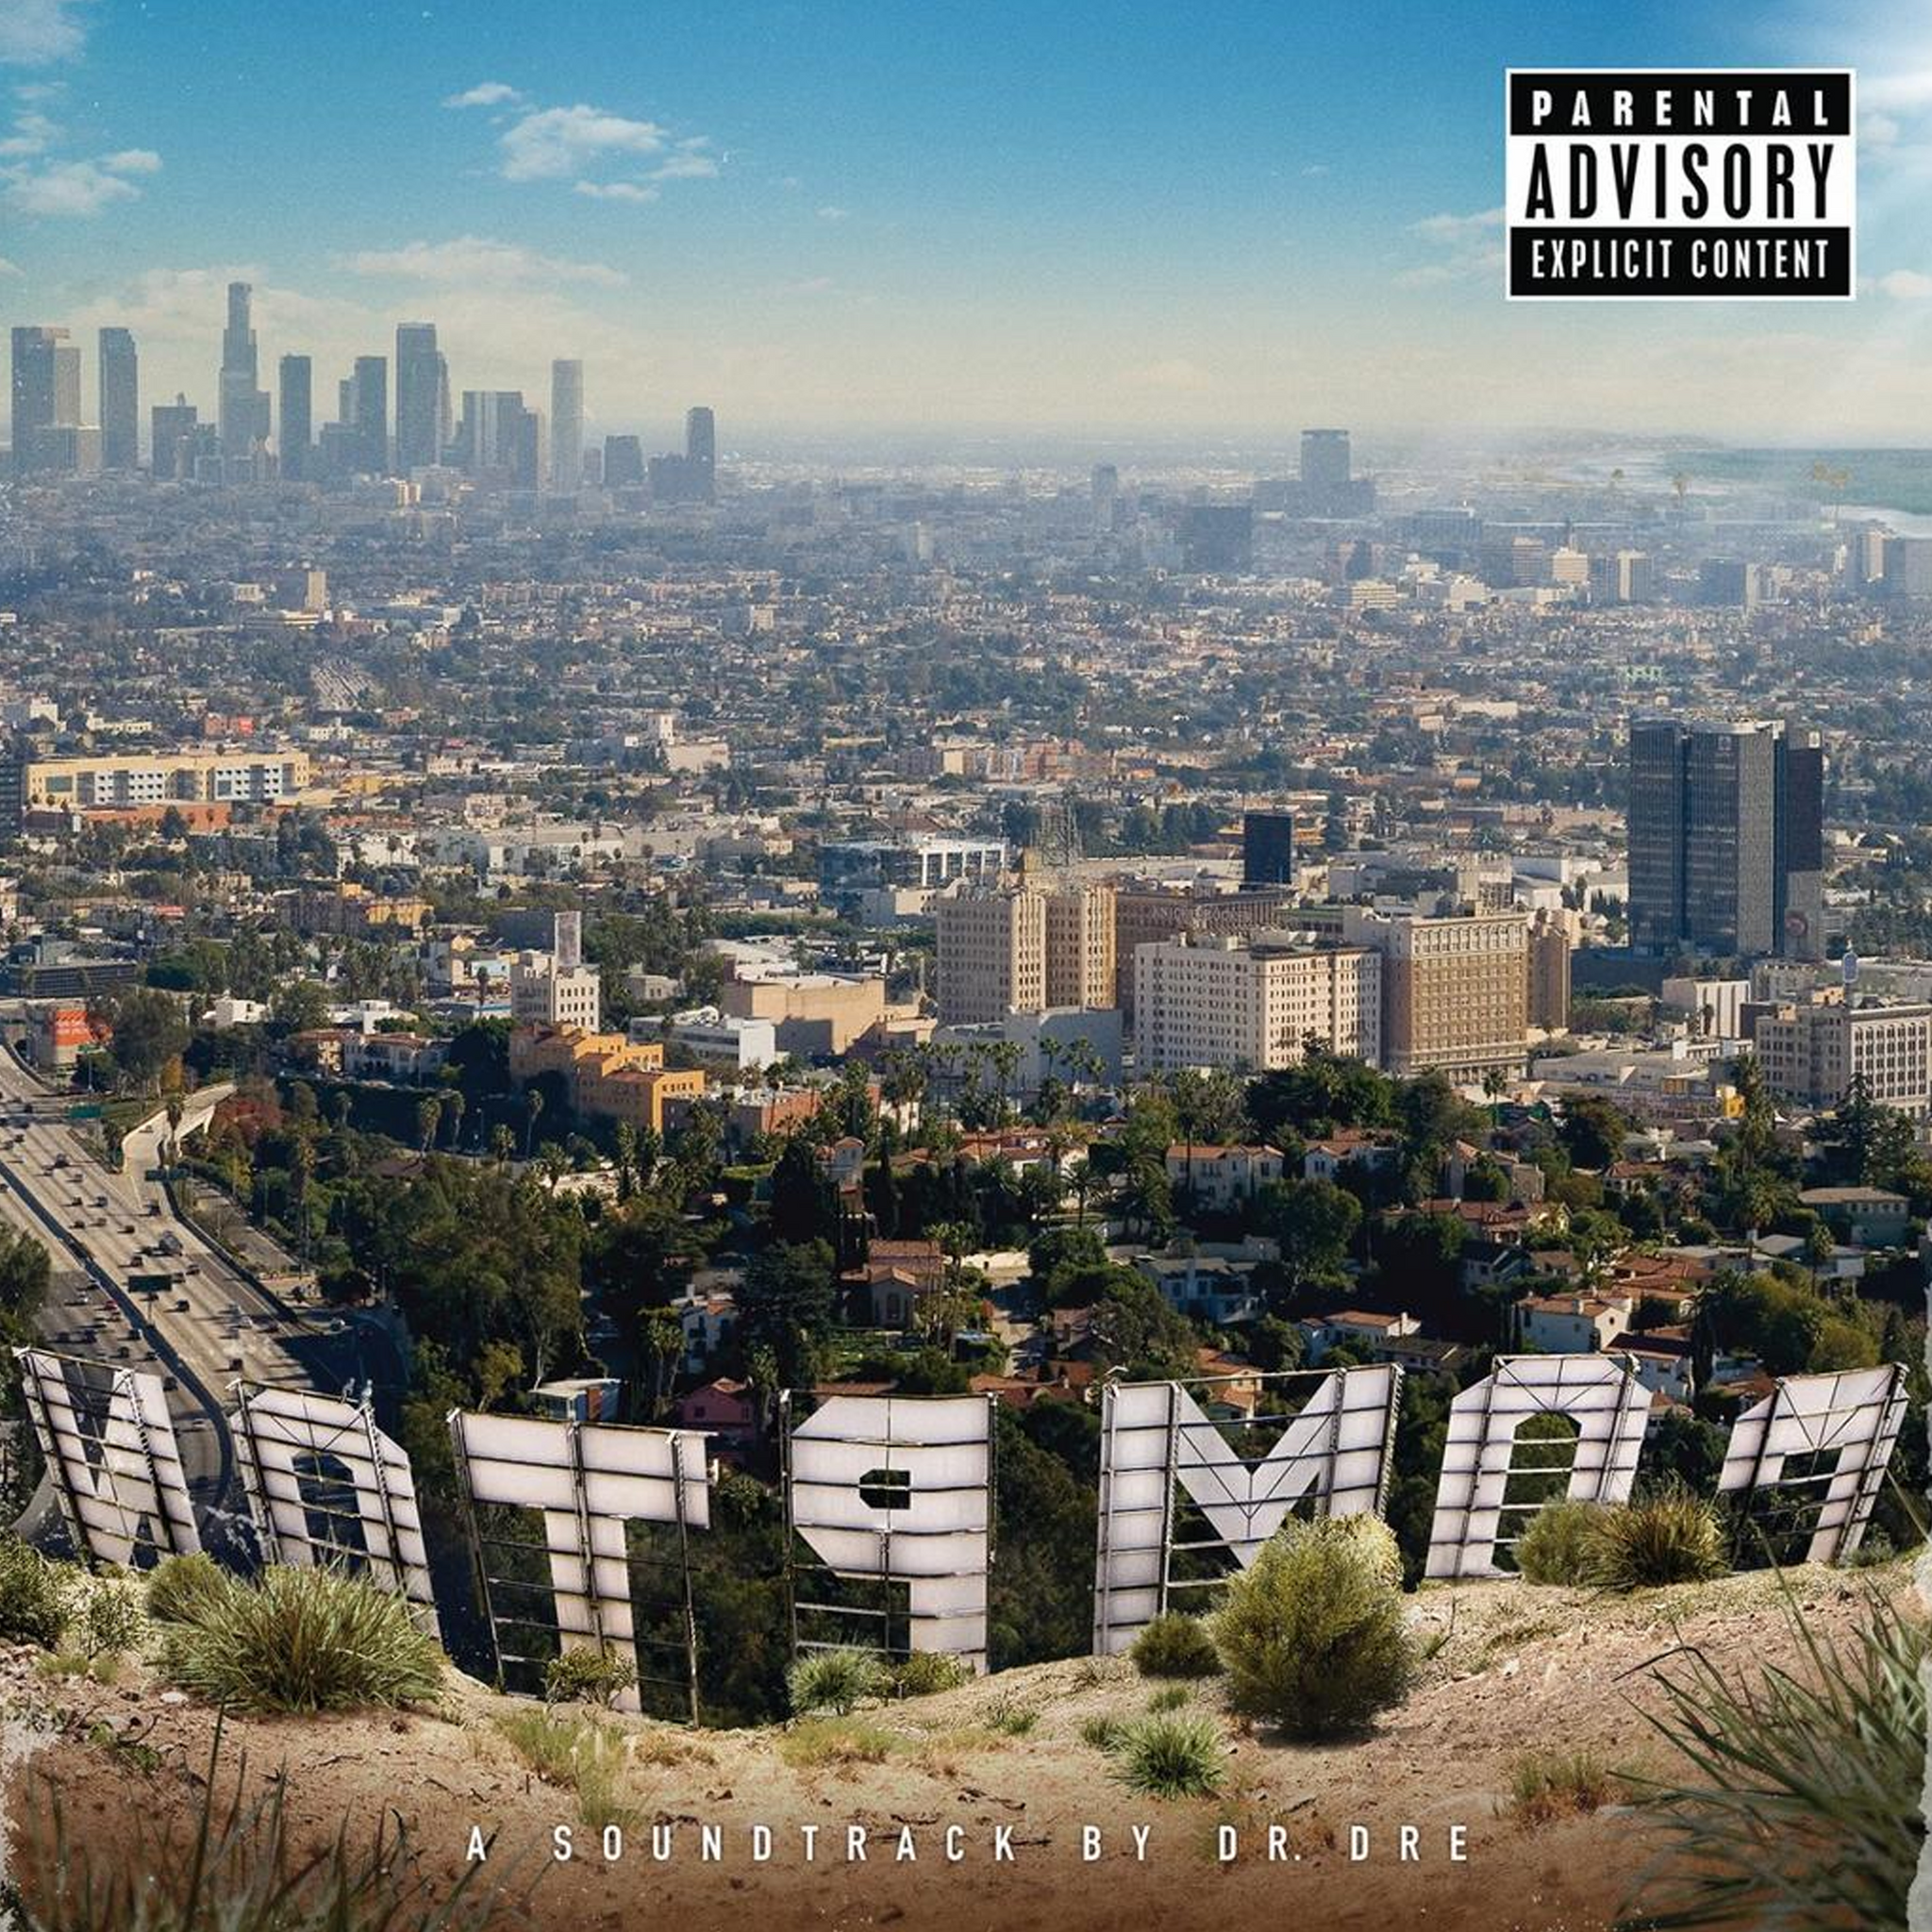 Dr. Dre - Compton - CD